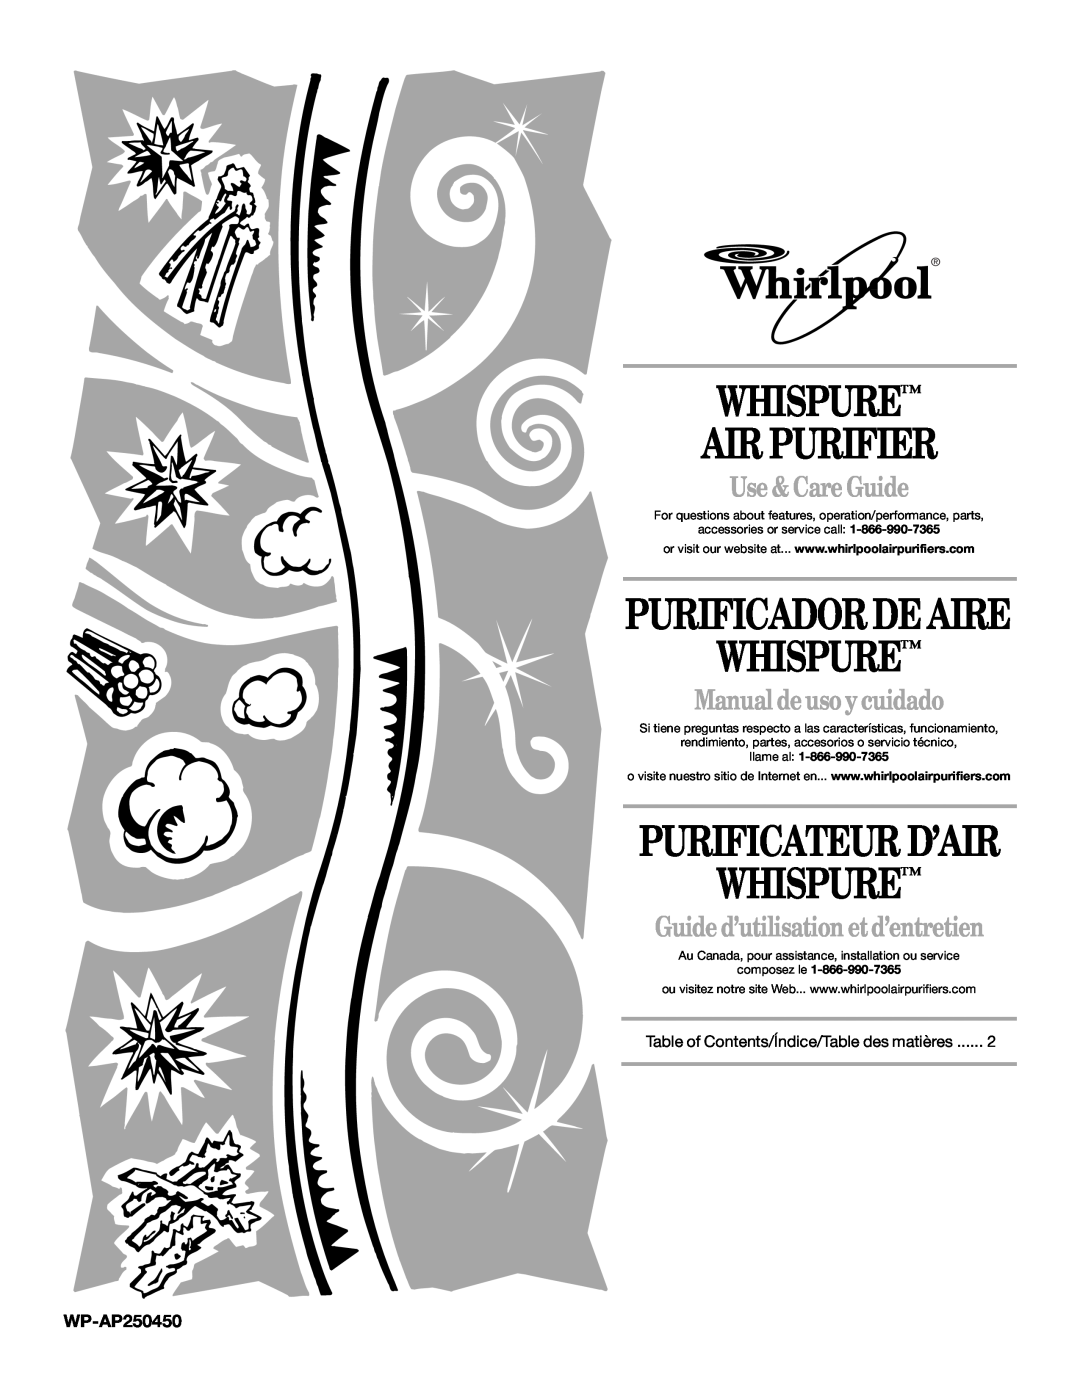 Whirlpool AP450 manual WP-AP250450, Whispure Air Purifier, Purificador De Aire Whispure, Purificateur D’Air, llame al 